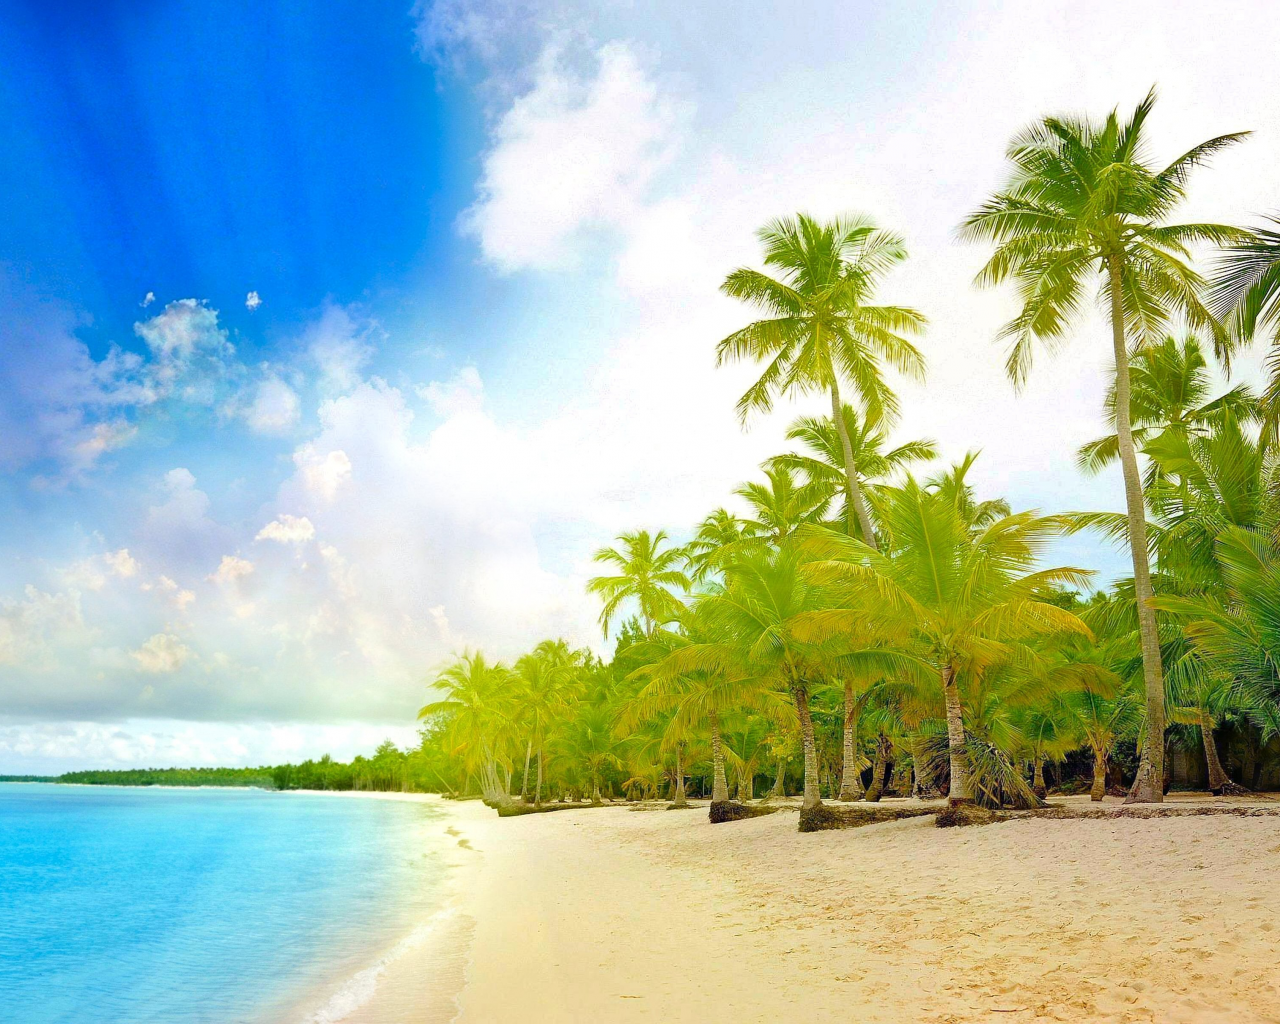 landscape, palm trees, beach, sea, tropics